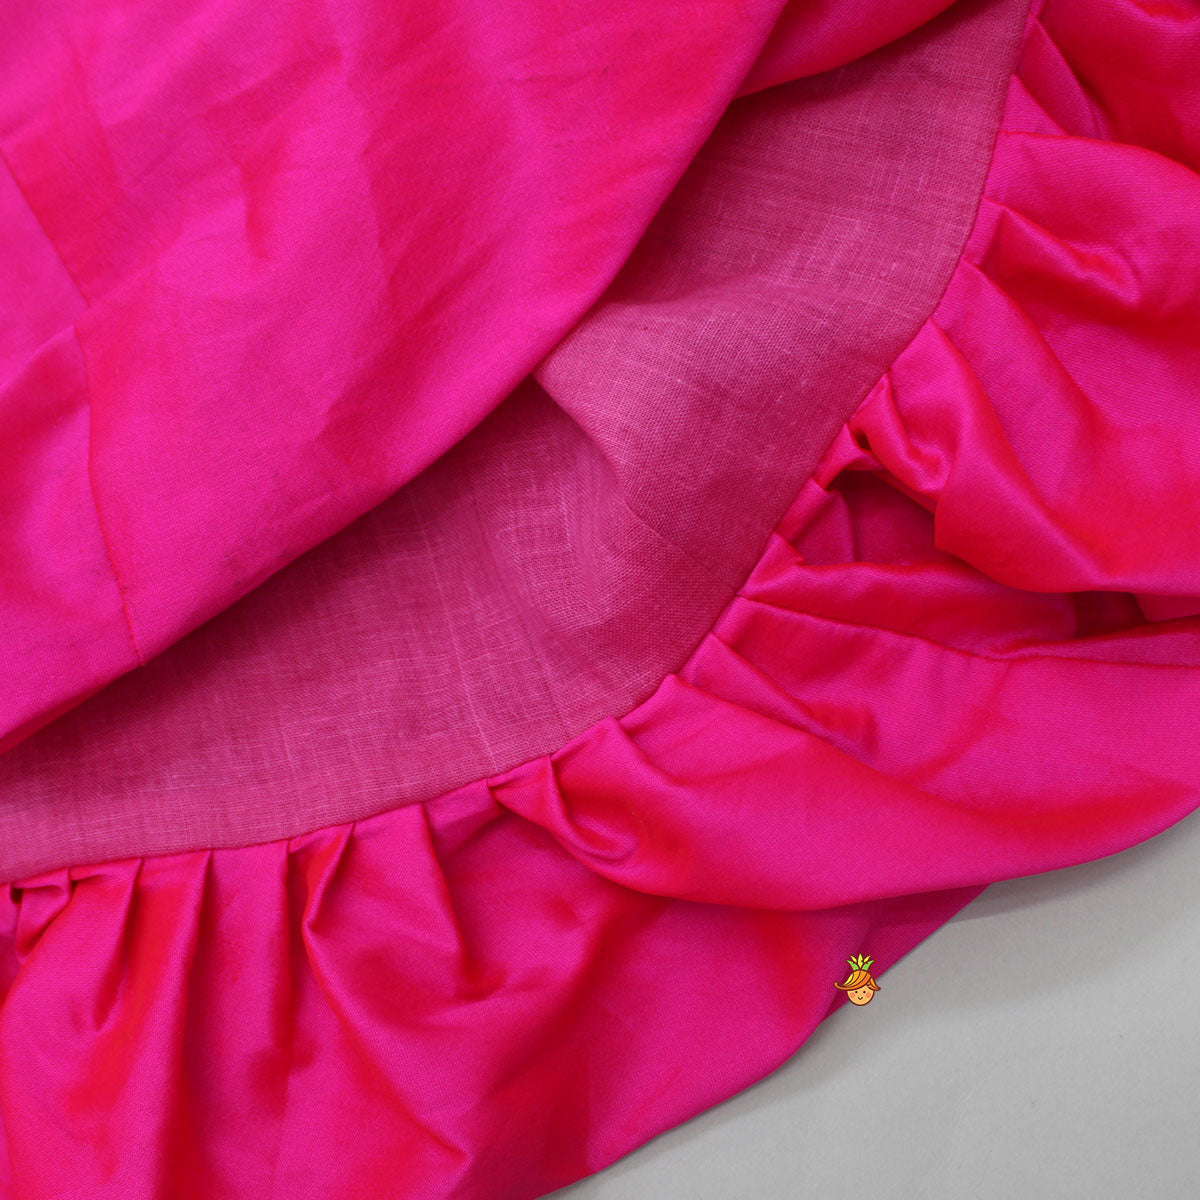 Stylish One-Shoulder Pink Top And Lehenga